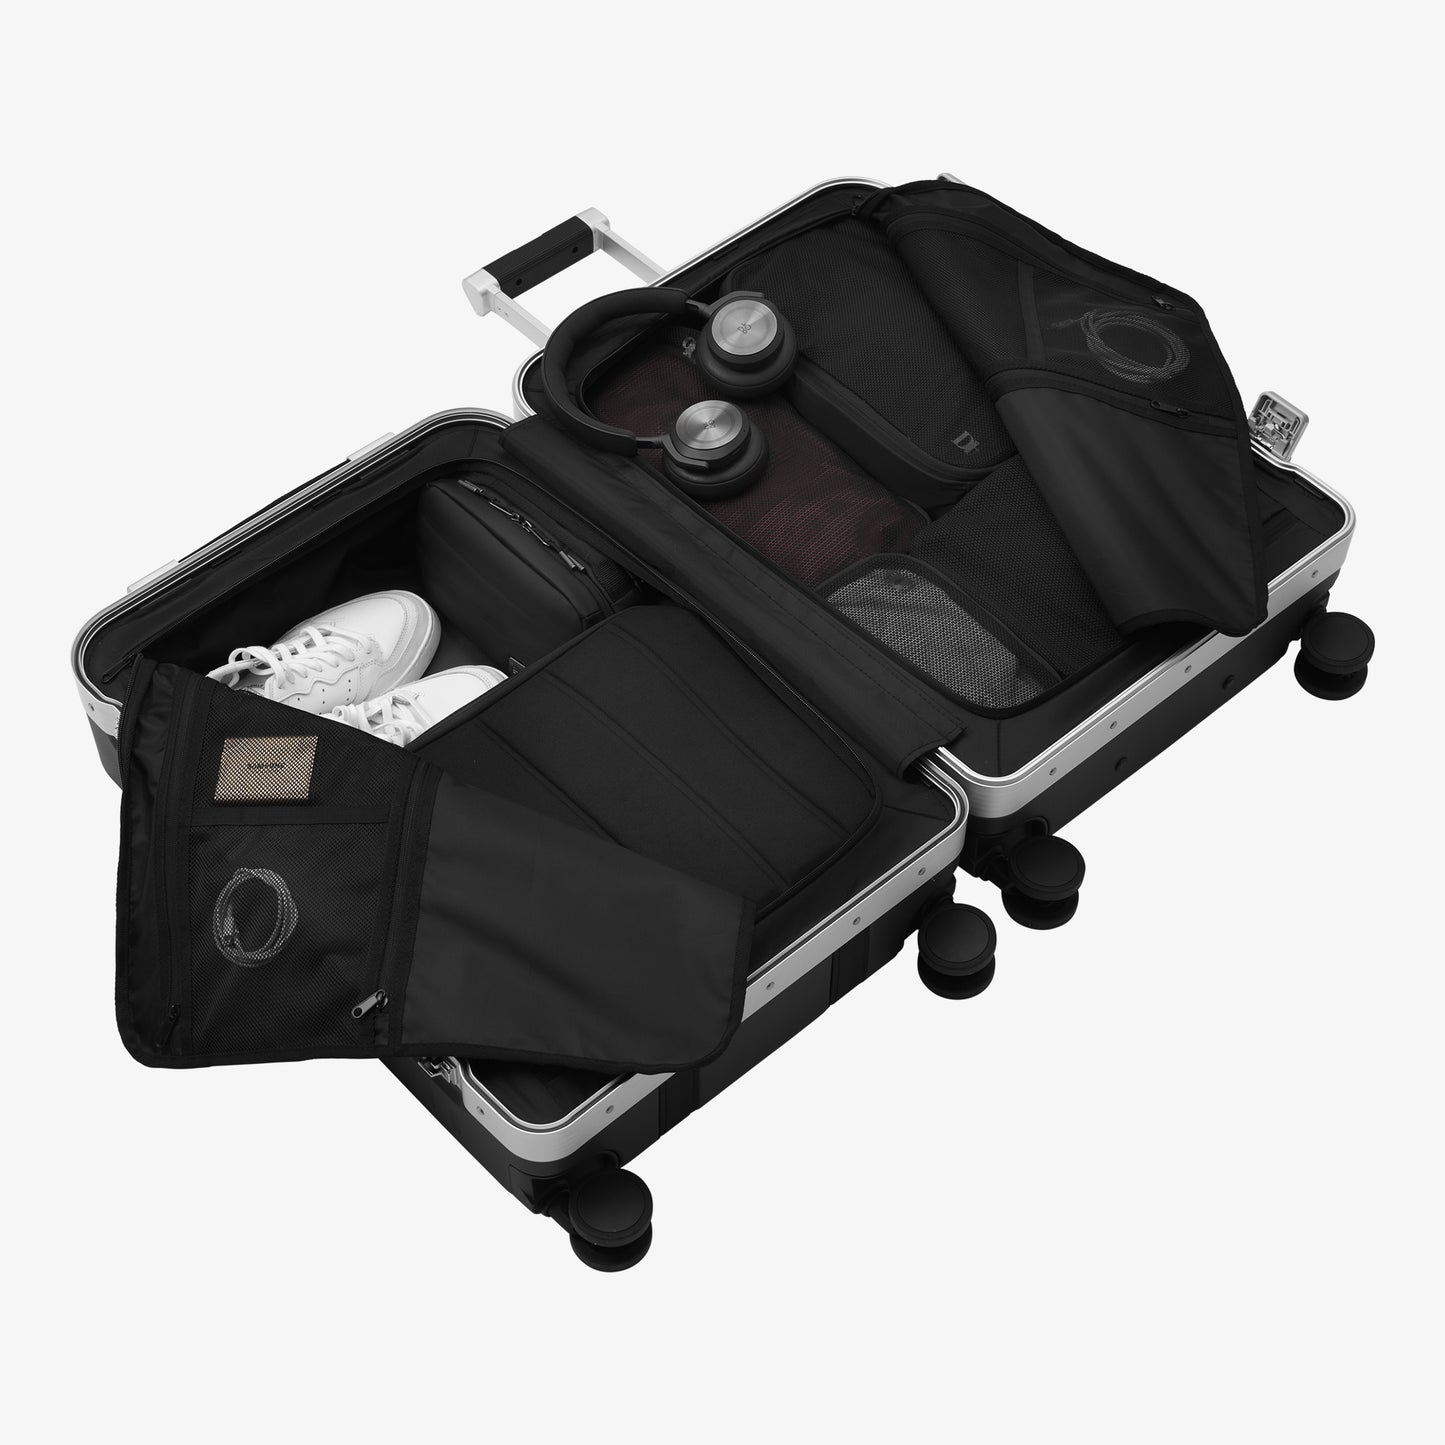 DB Journey Ramverk Pro Check-in Luggage Medium Silver